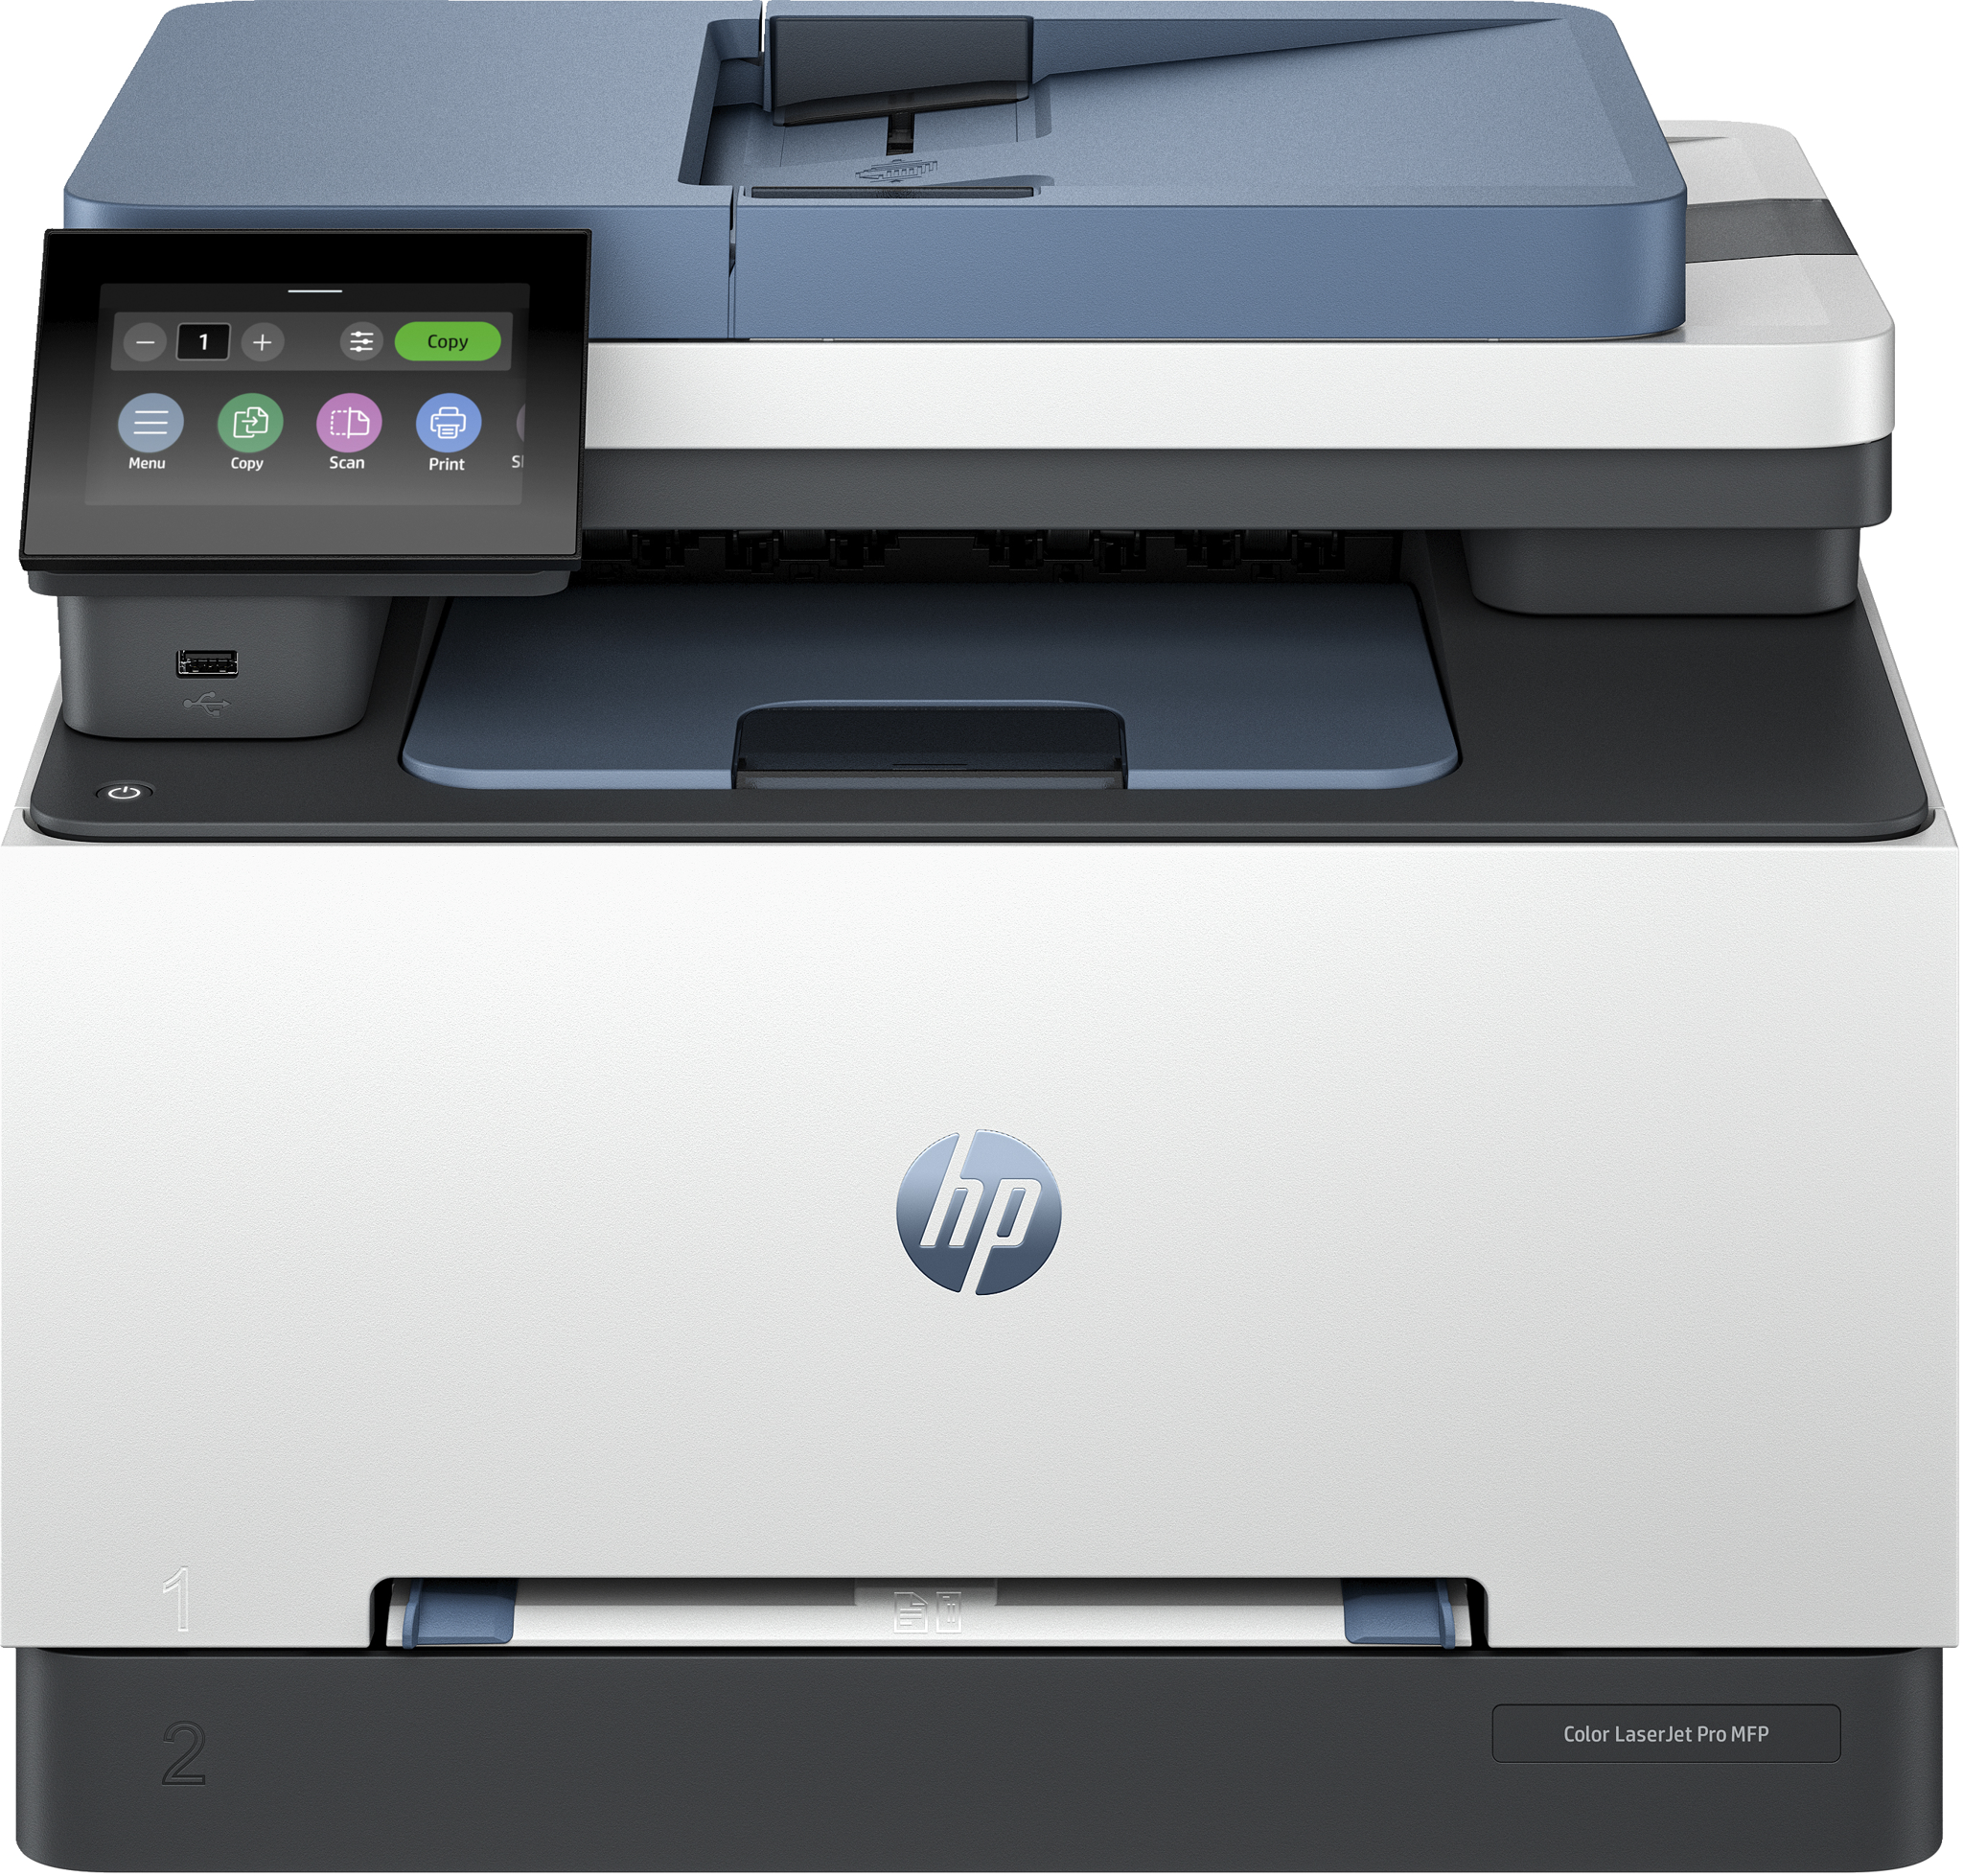 Bild von HP Color LaserJet Pro MFP 3302fdn, Laser, Farbdruck, 600 x 600 DPI, A4, Direktdruck, Blau, Grau, Weiß